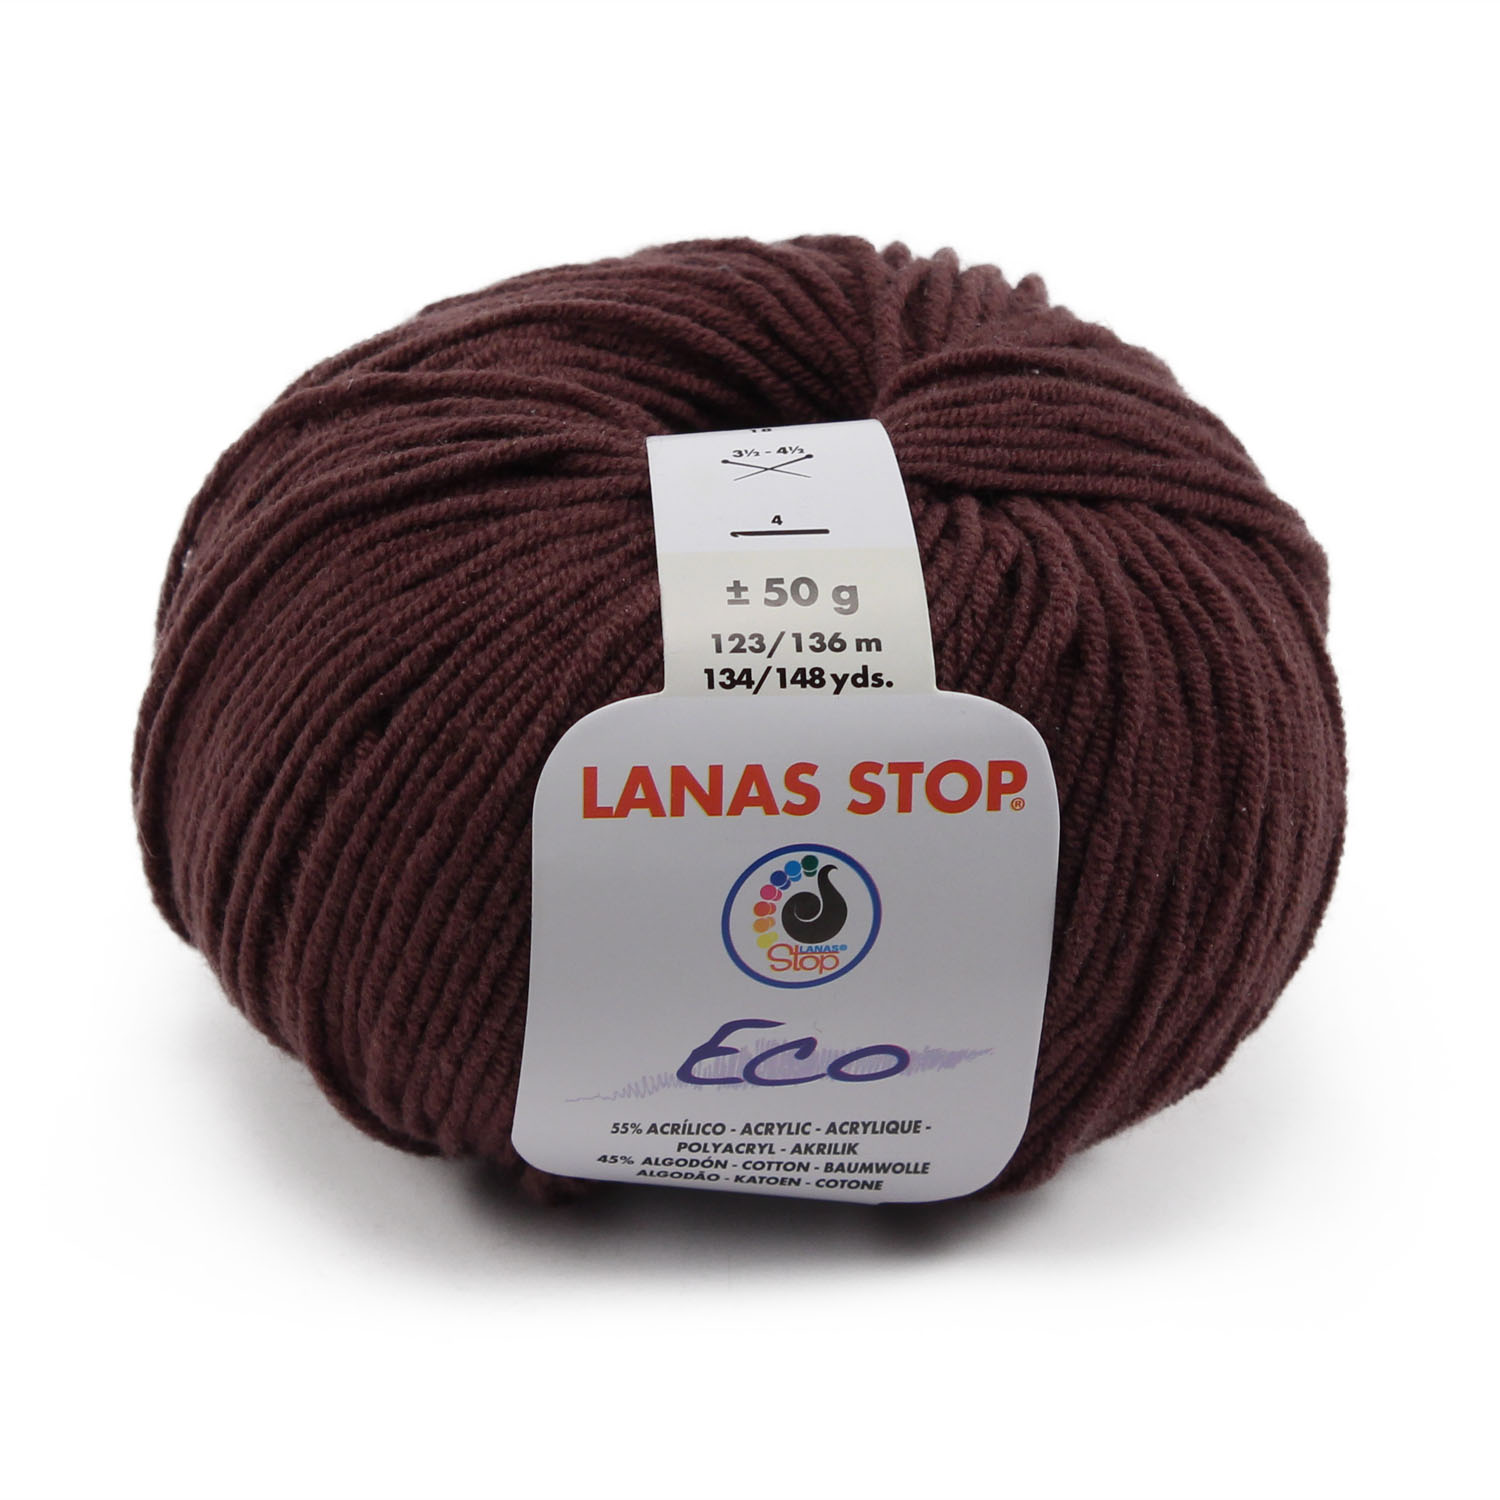 lanas-stop-eco-730-marron-oscuro